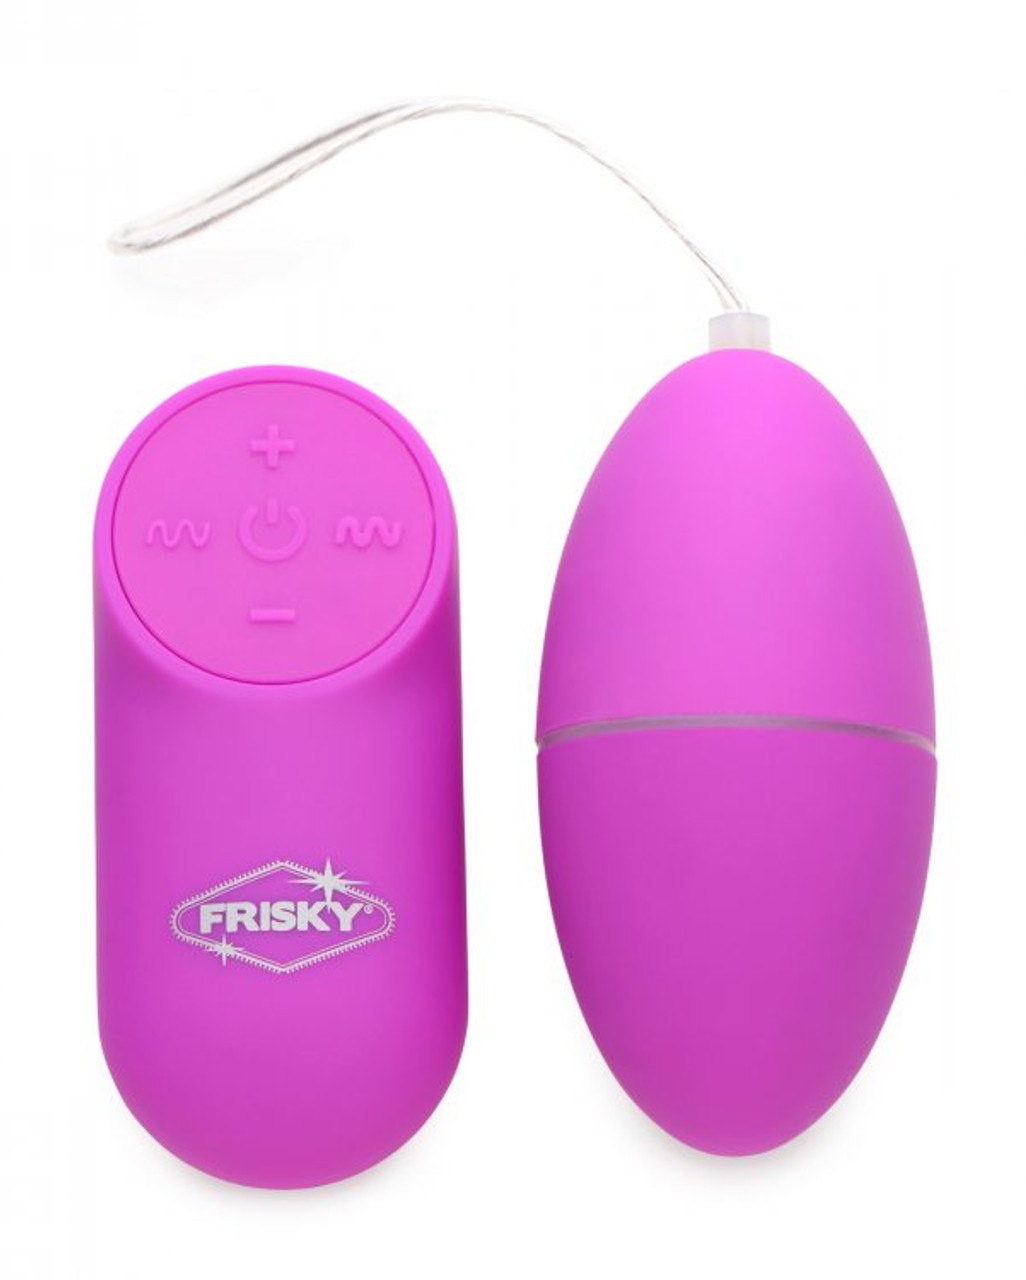 Frisky Scrambler 28X Vibrating Egg with Remote Control